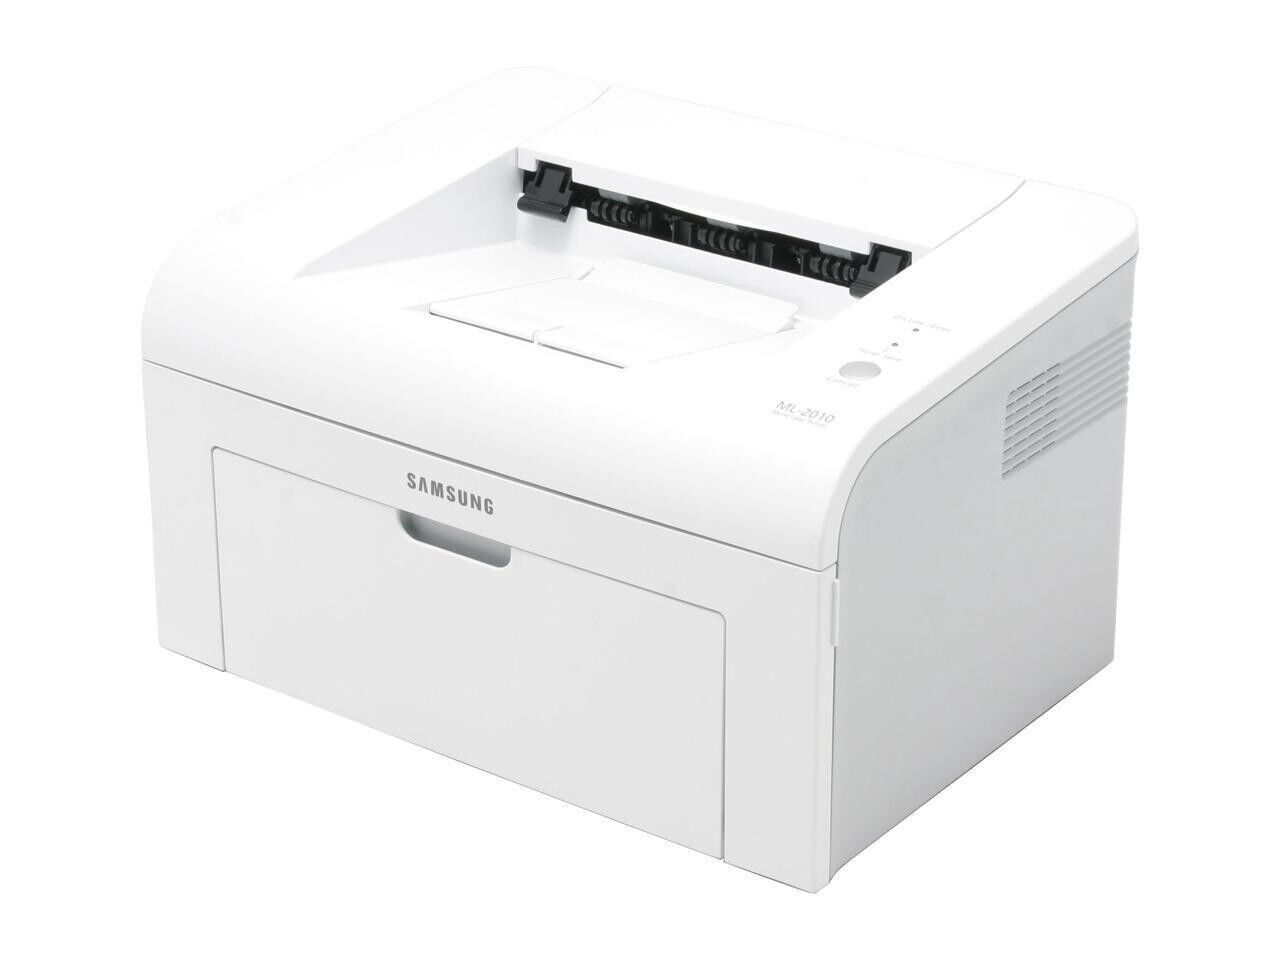 Samsung ML-4551 Laser Printer series